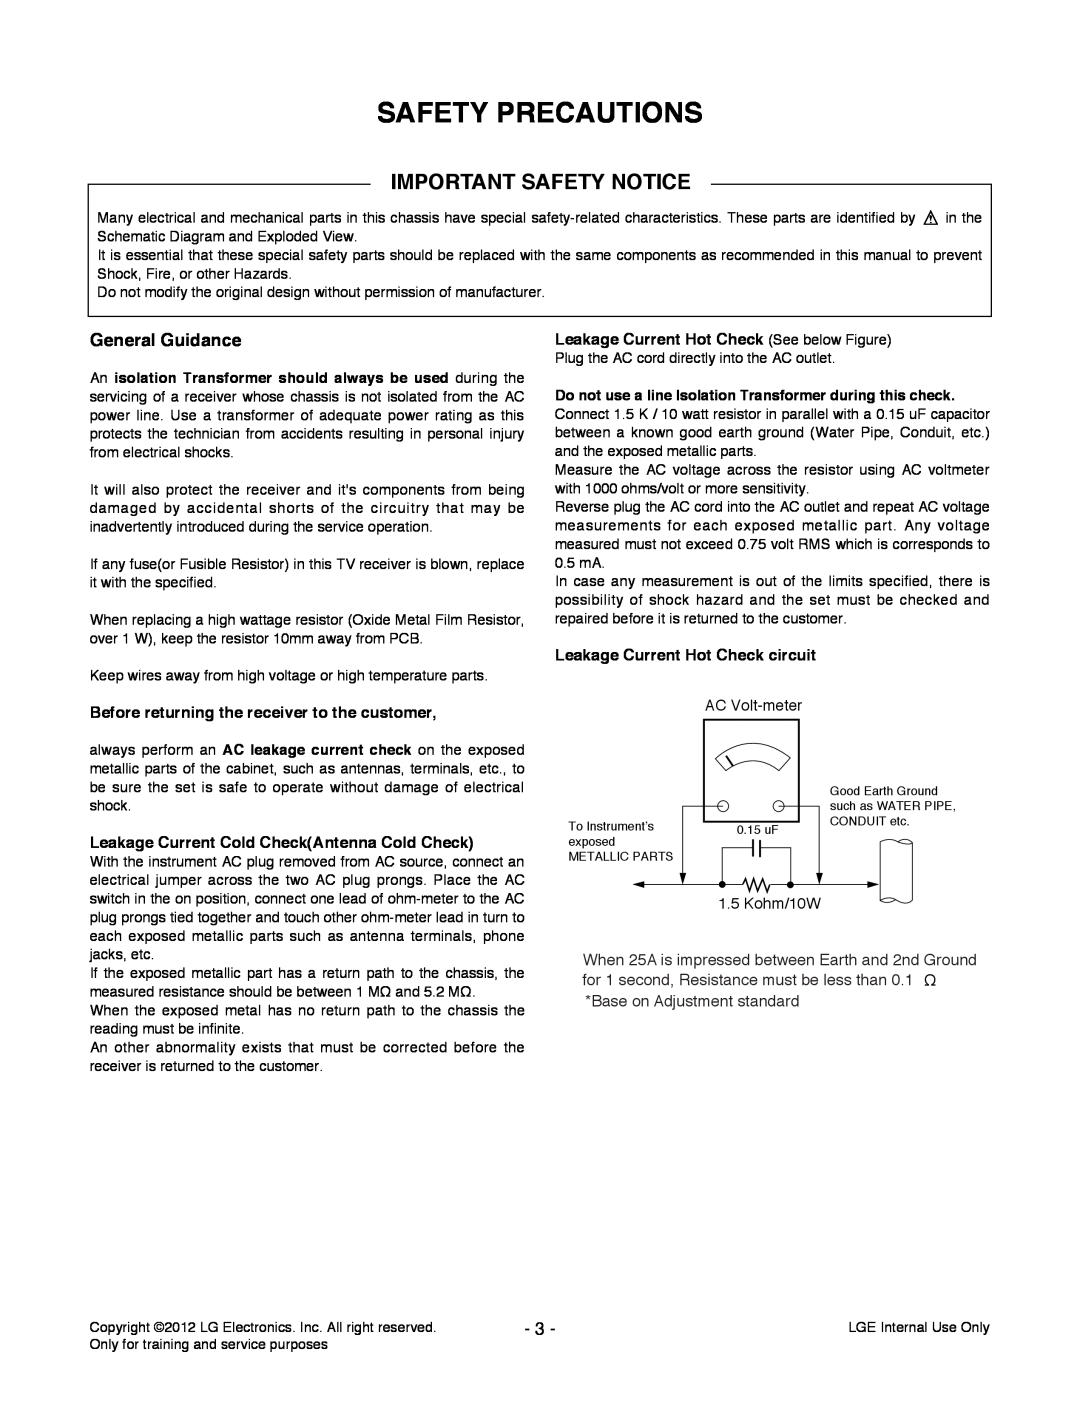 LG Electronics 42CS669C-ZD Safety Precautions, Important Safety Notice, General Guidance, AC Volt-meter, Kohm/10W 